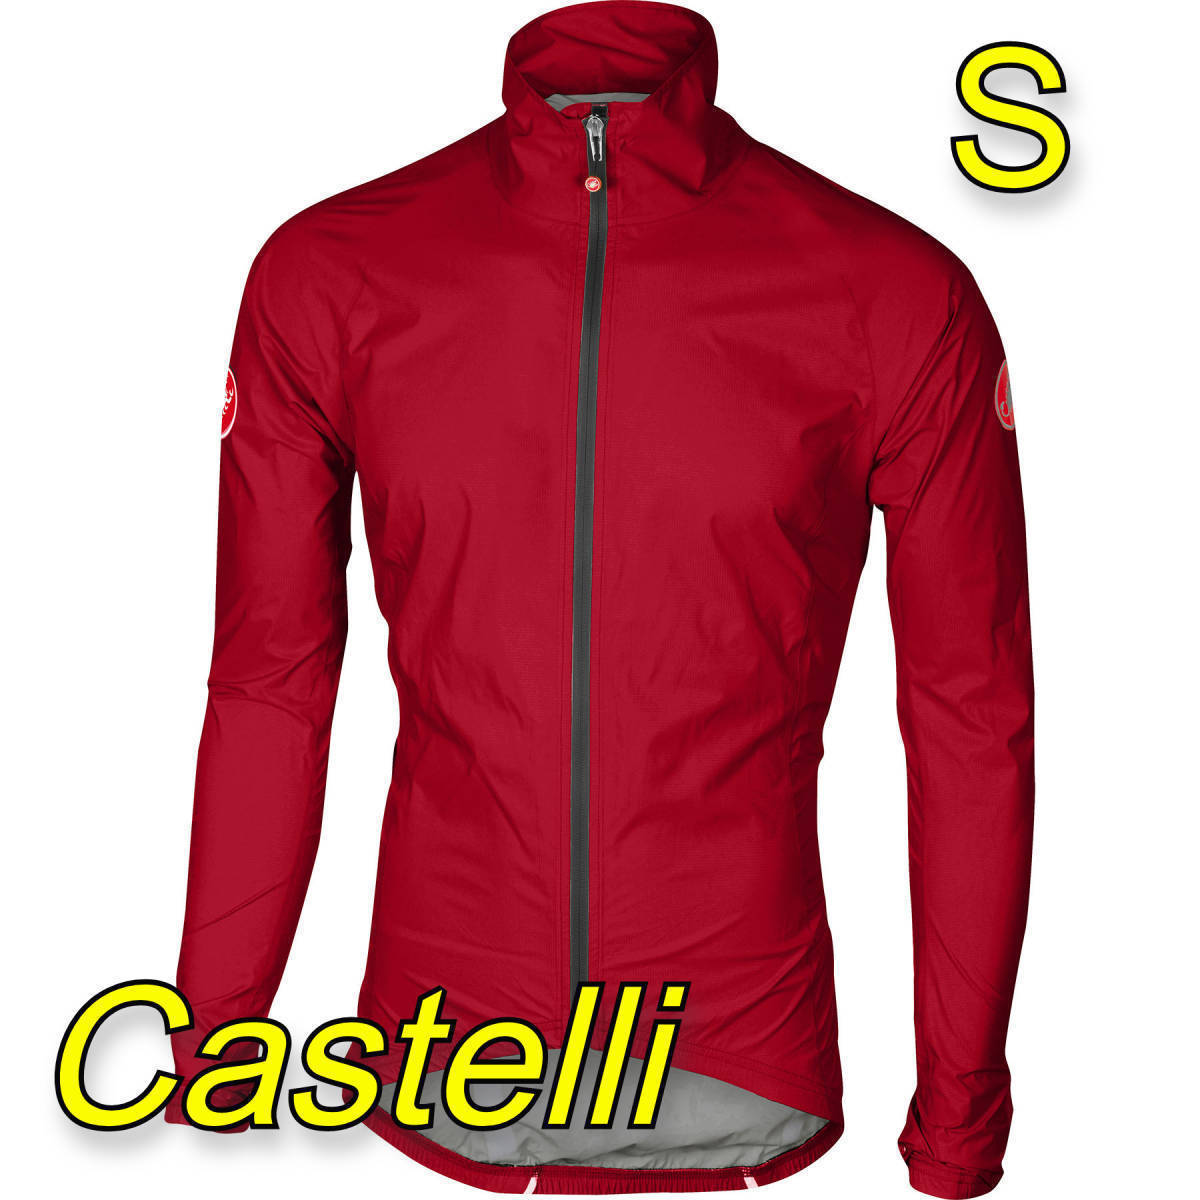 【S】CASTELLI EMERGENCY RAIN JACKET カステリ レインジャケット レッド 赤 / 梅雨対策 防水 防風 レインウェア 自転車 ロードバイク